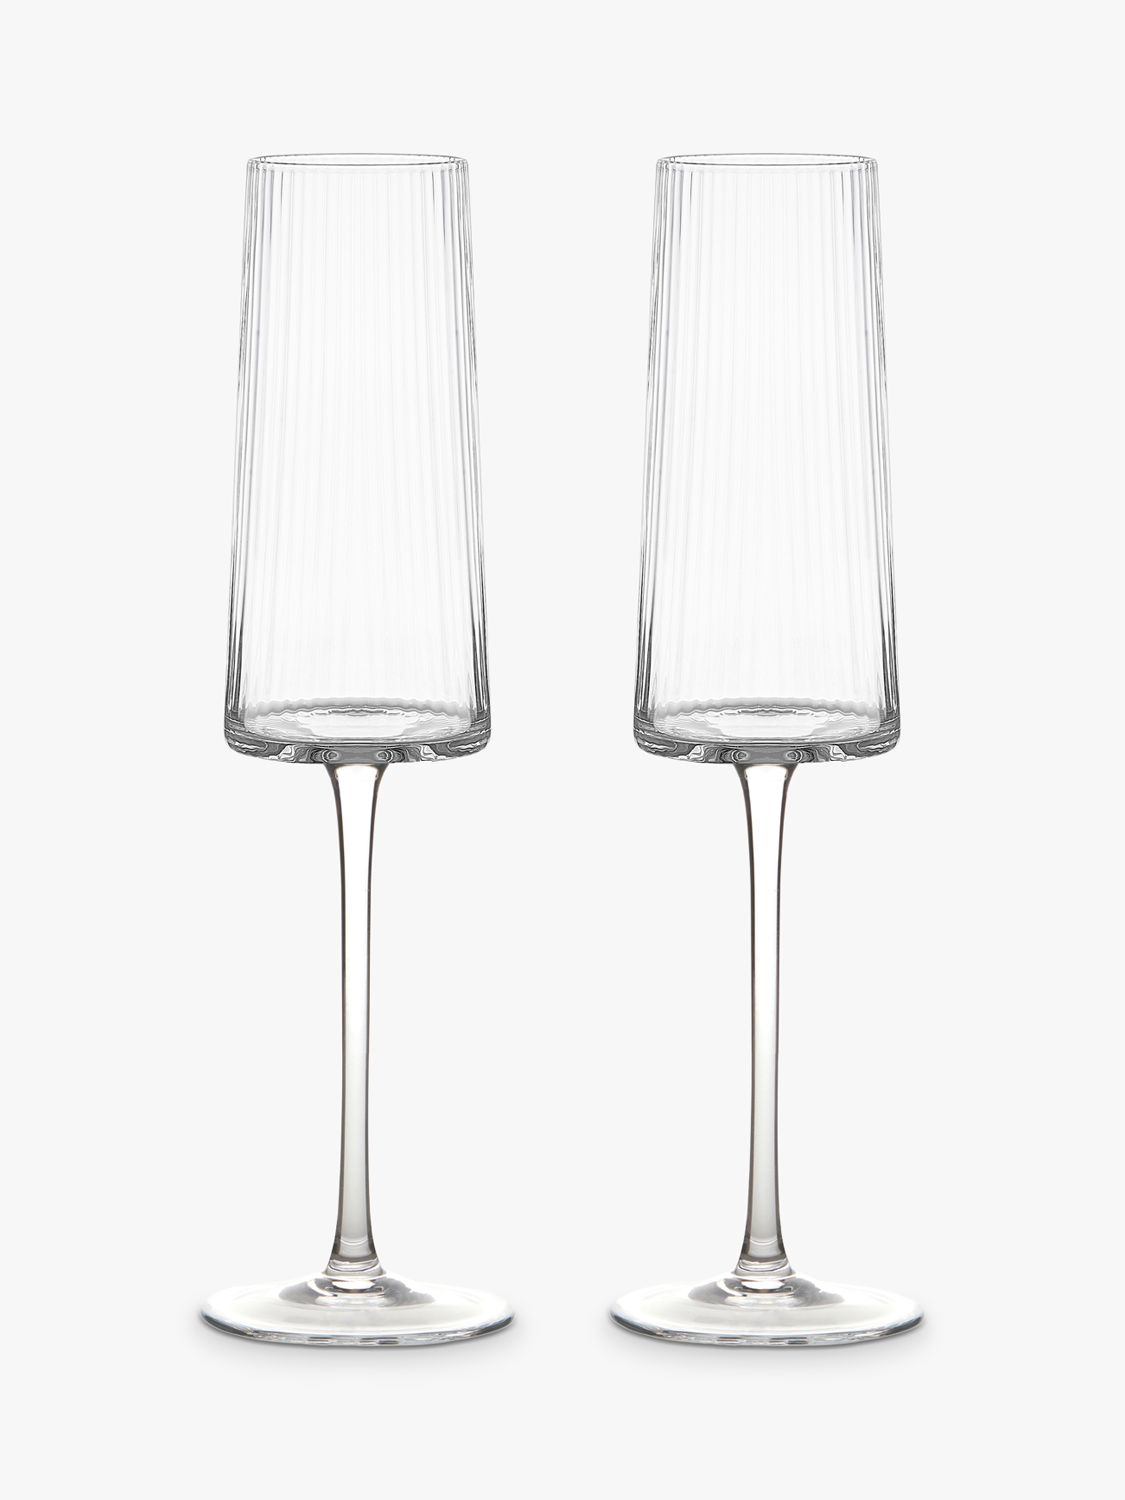 SoHo Champagne Flutes Silver - Set of 2 - Anton Studio Designs